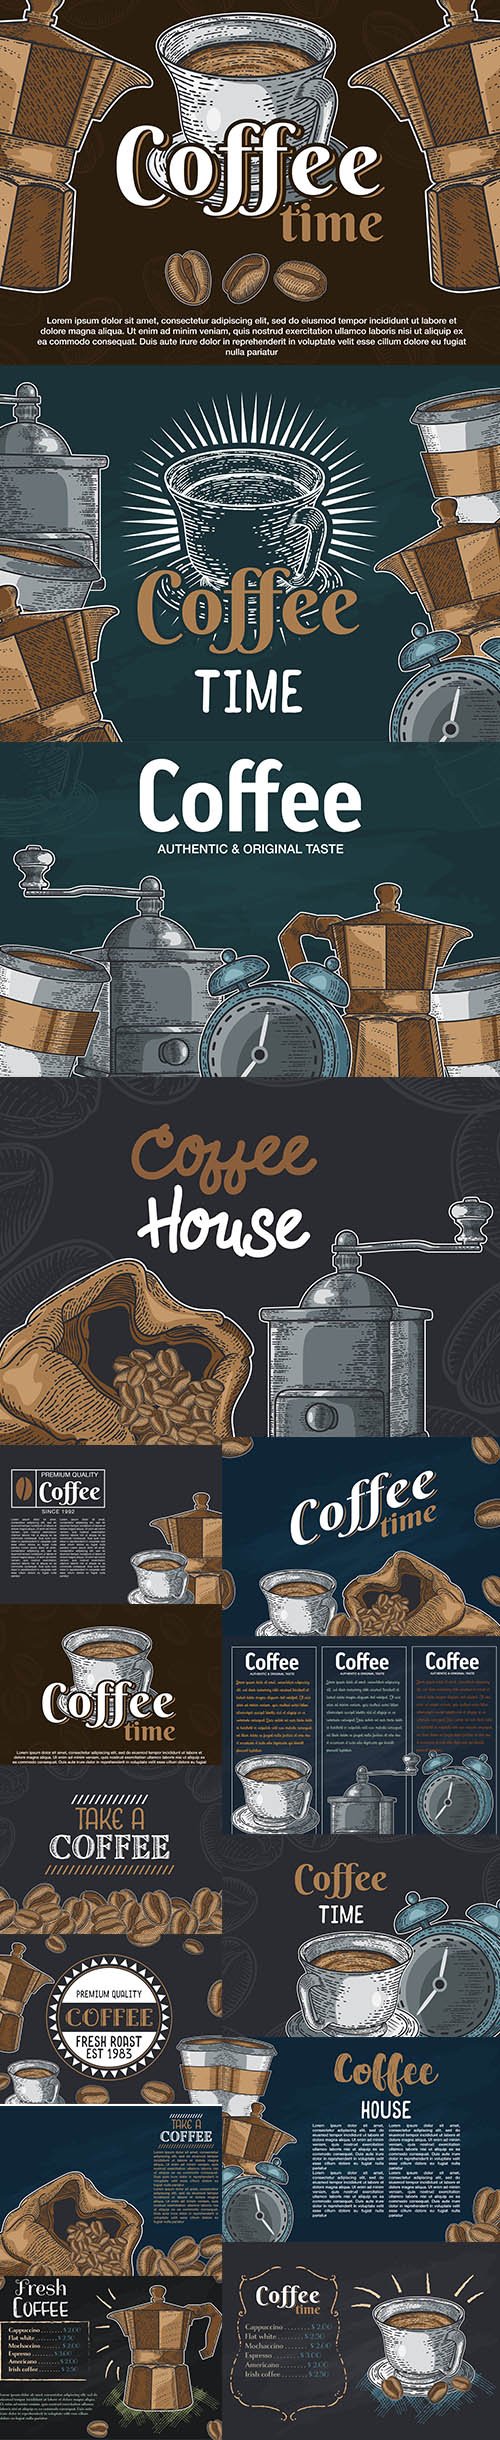 Hand-Drawn Sketch Illustration Coffee Design Vector